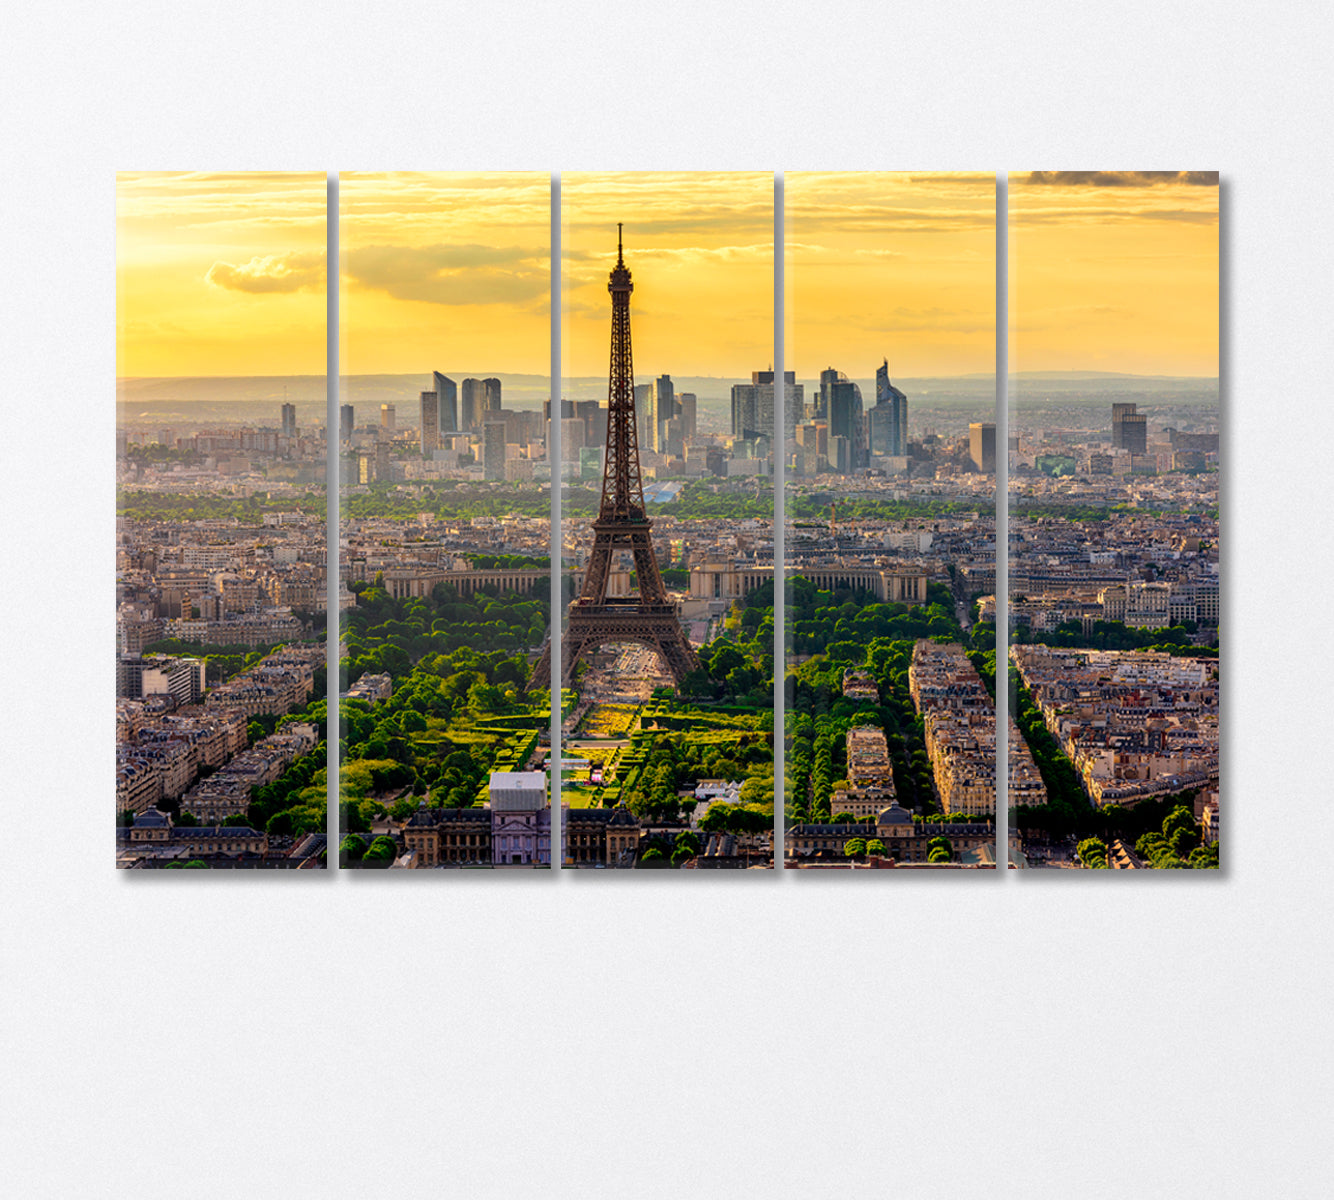 Skyline of Paris with Eiffel Tower at Sunset Canvas Print-Canvas Print-CetArt-5 Panels-36x24 inches-CetArt